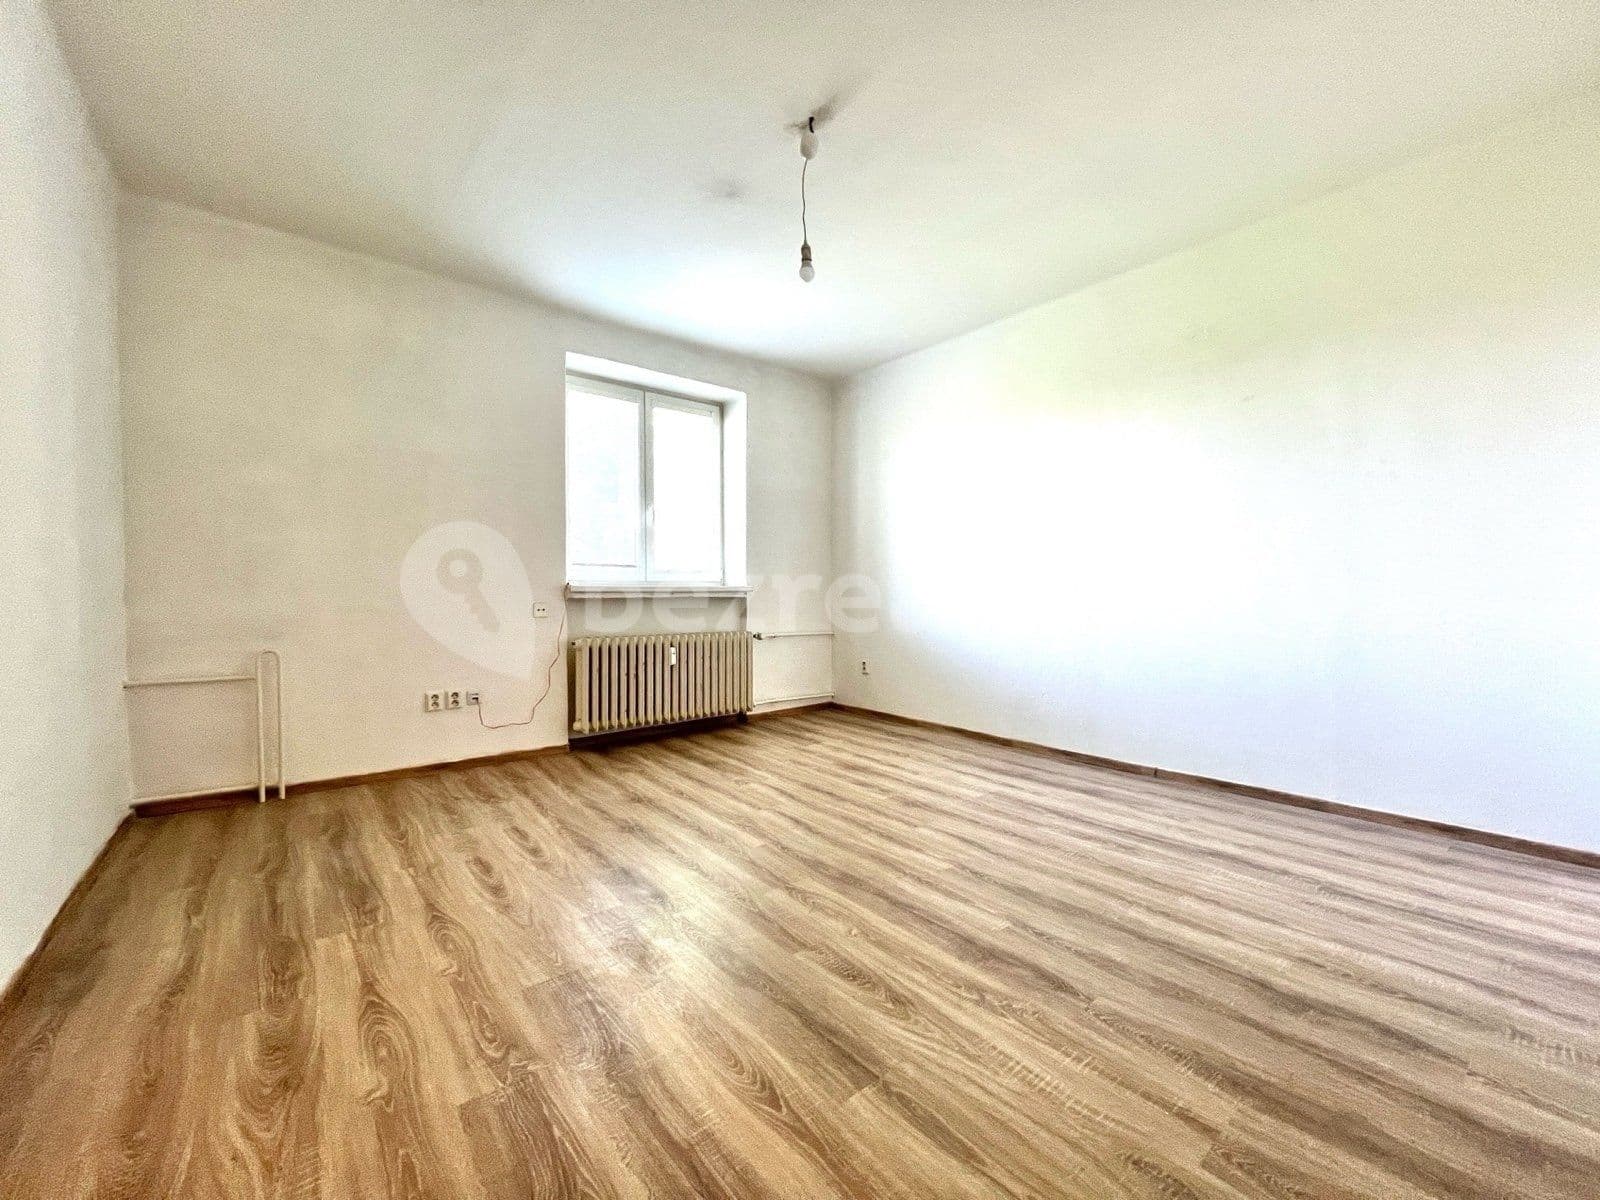 2 bedroom flat to rent, 54 m², Havanská, Ostrava, Moravskoslezský Region